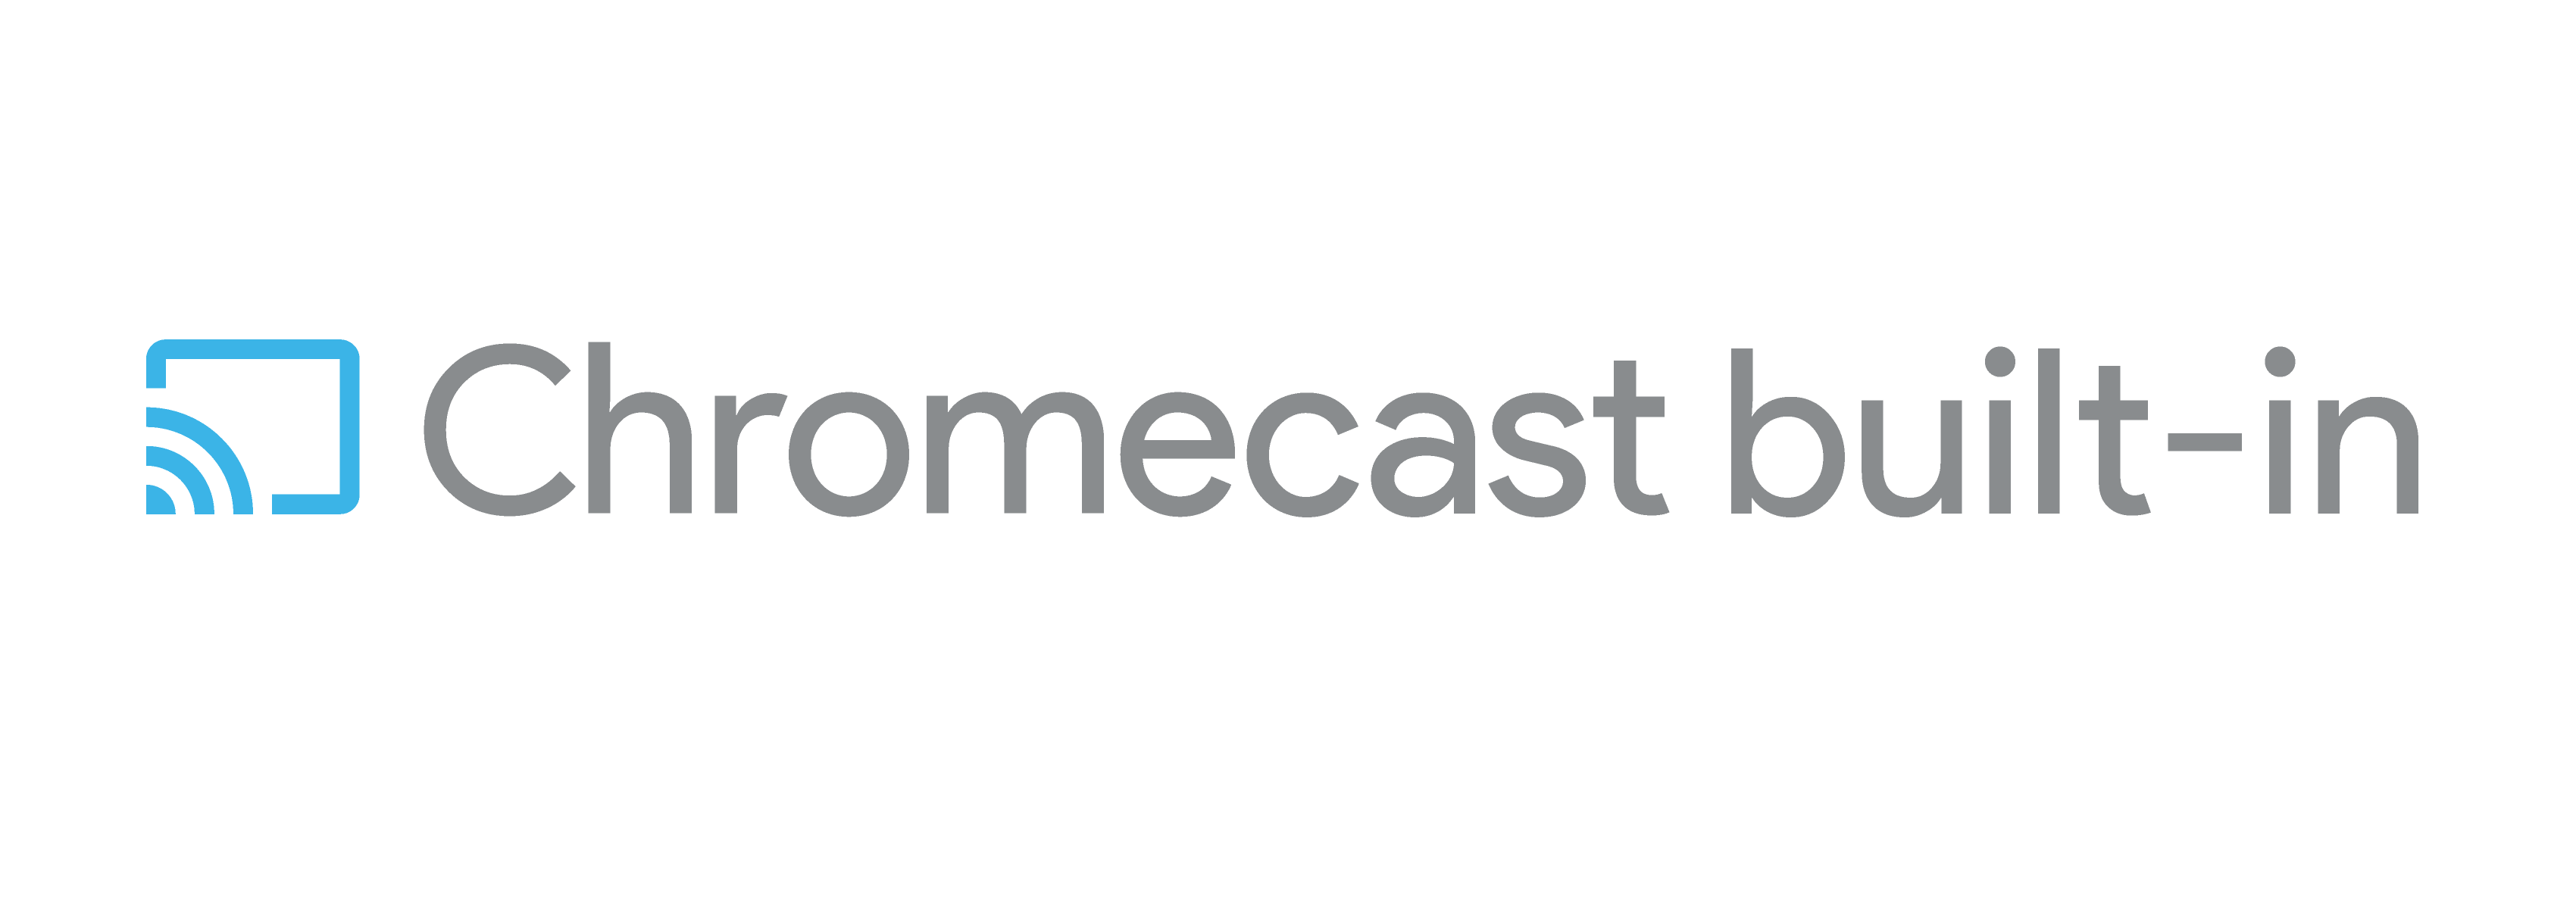 User Experience With the Chromecast Platform | Cast | Google Developers